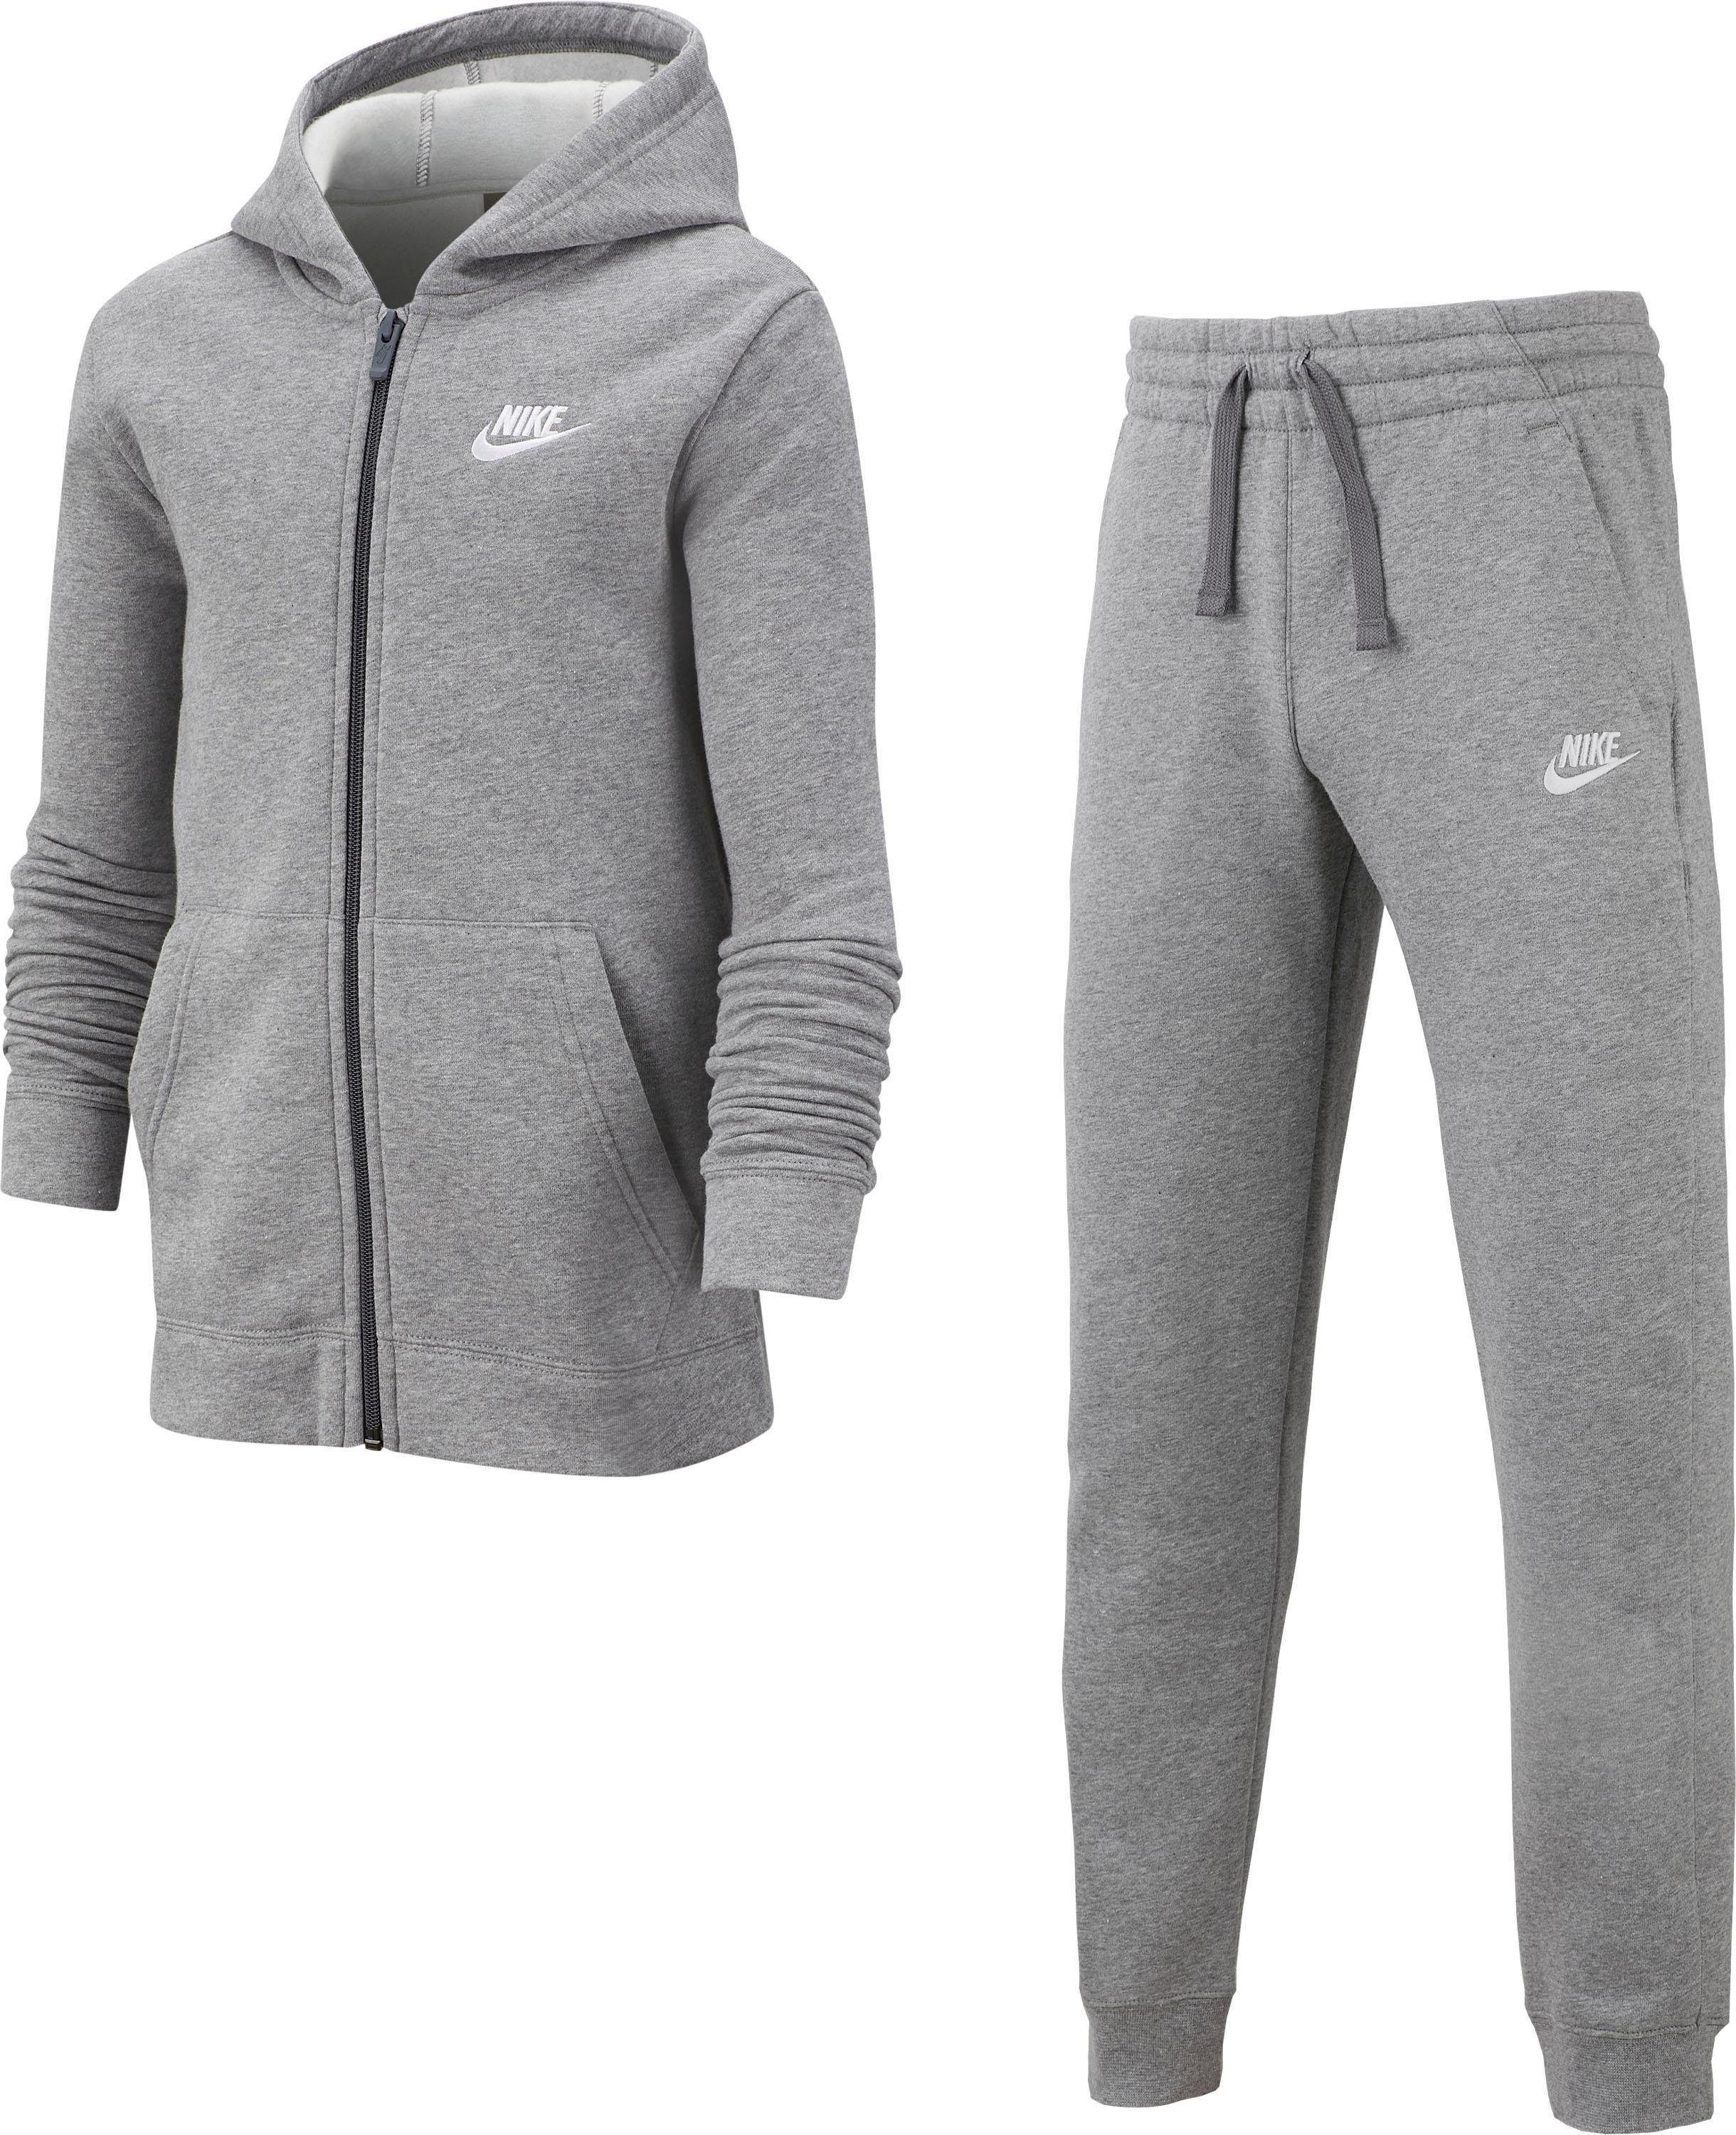 Nike Sportswear Jogginganzug NSW CORE Kinder für grau-meliert 2-tlg), (Set